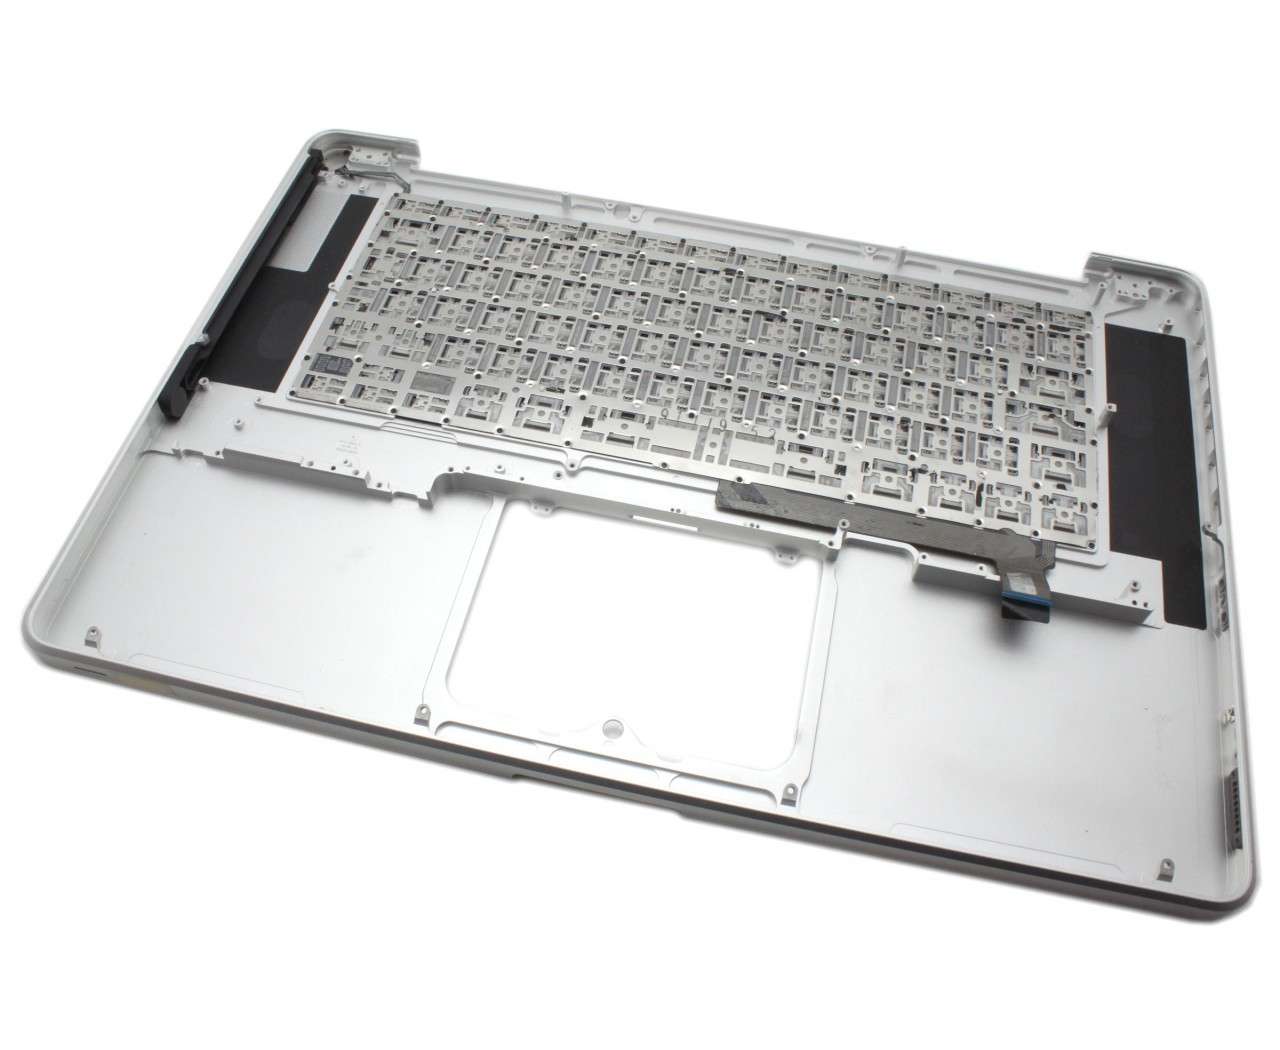 Tastatura Apple MacBook Pro 15 MD318 Neagra cu Palmrest Argintiu Refurbished Apple Apple